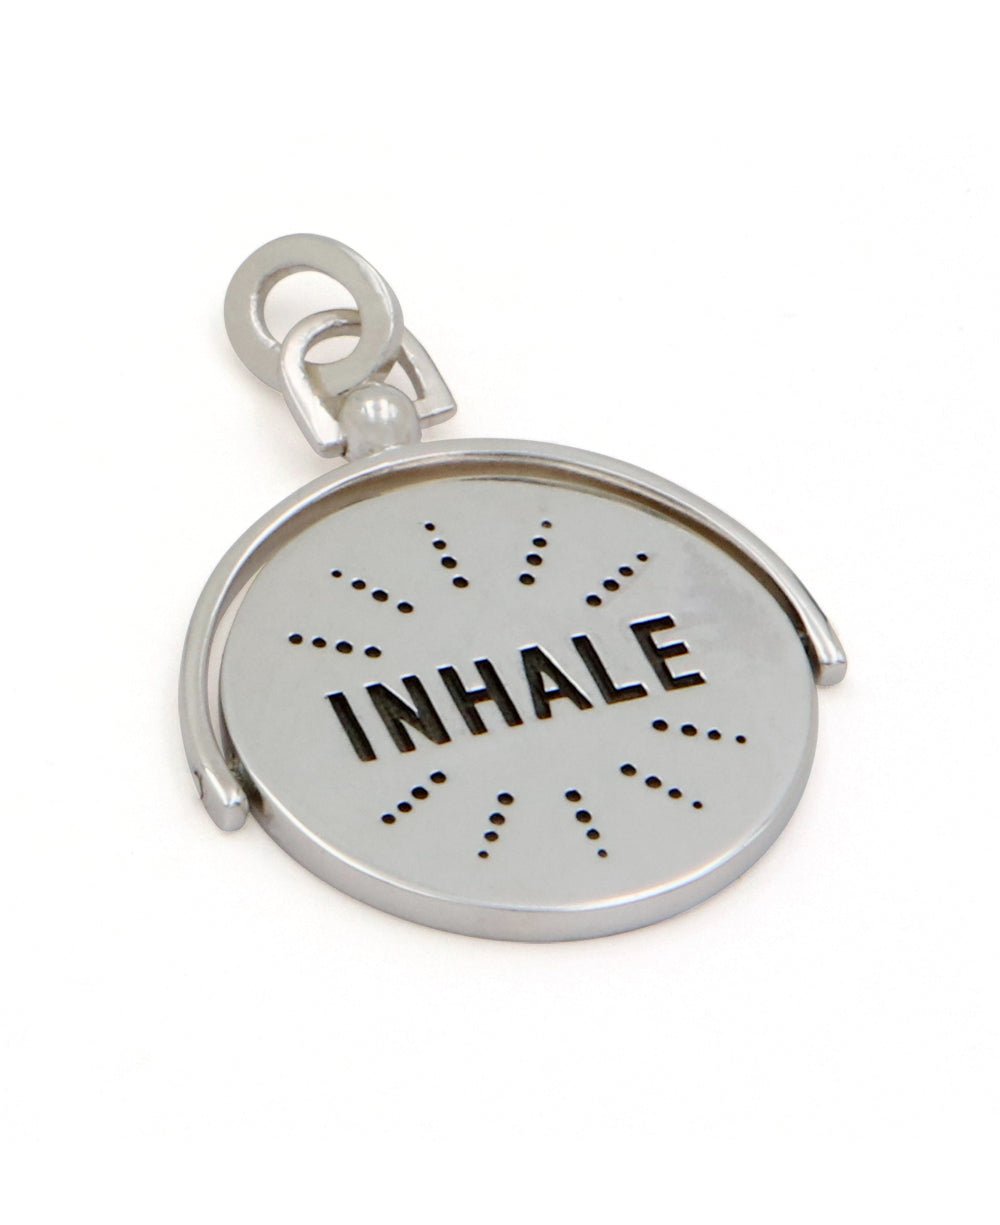 Inhale Exhale Spinning Meditation Pendant Necklace -